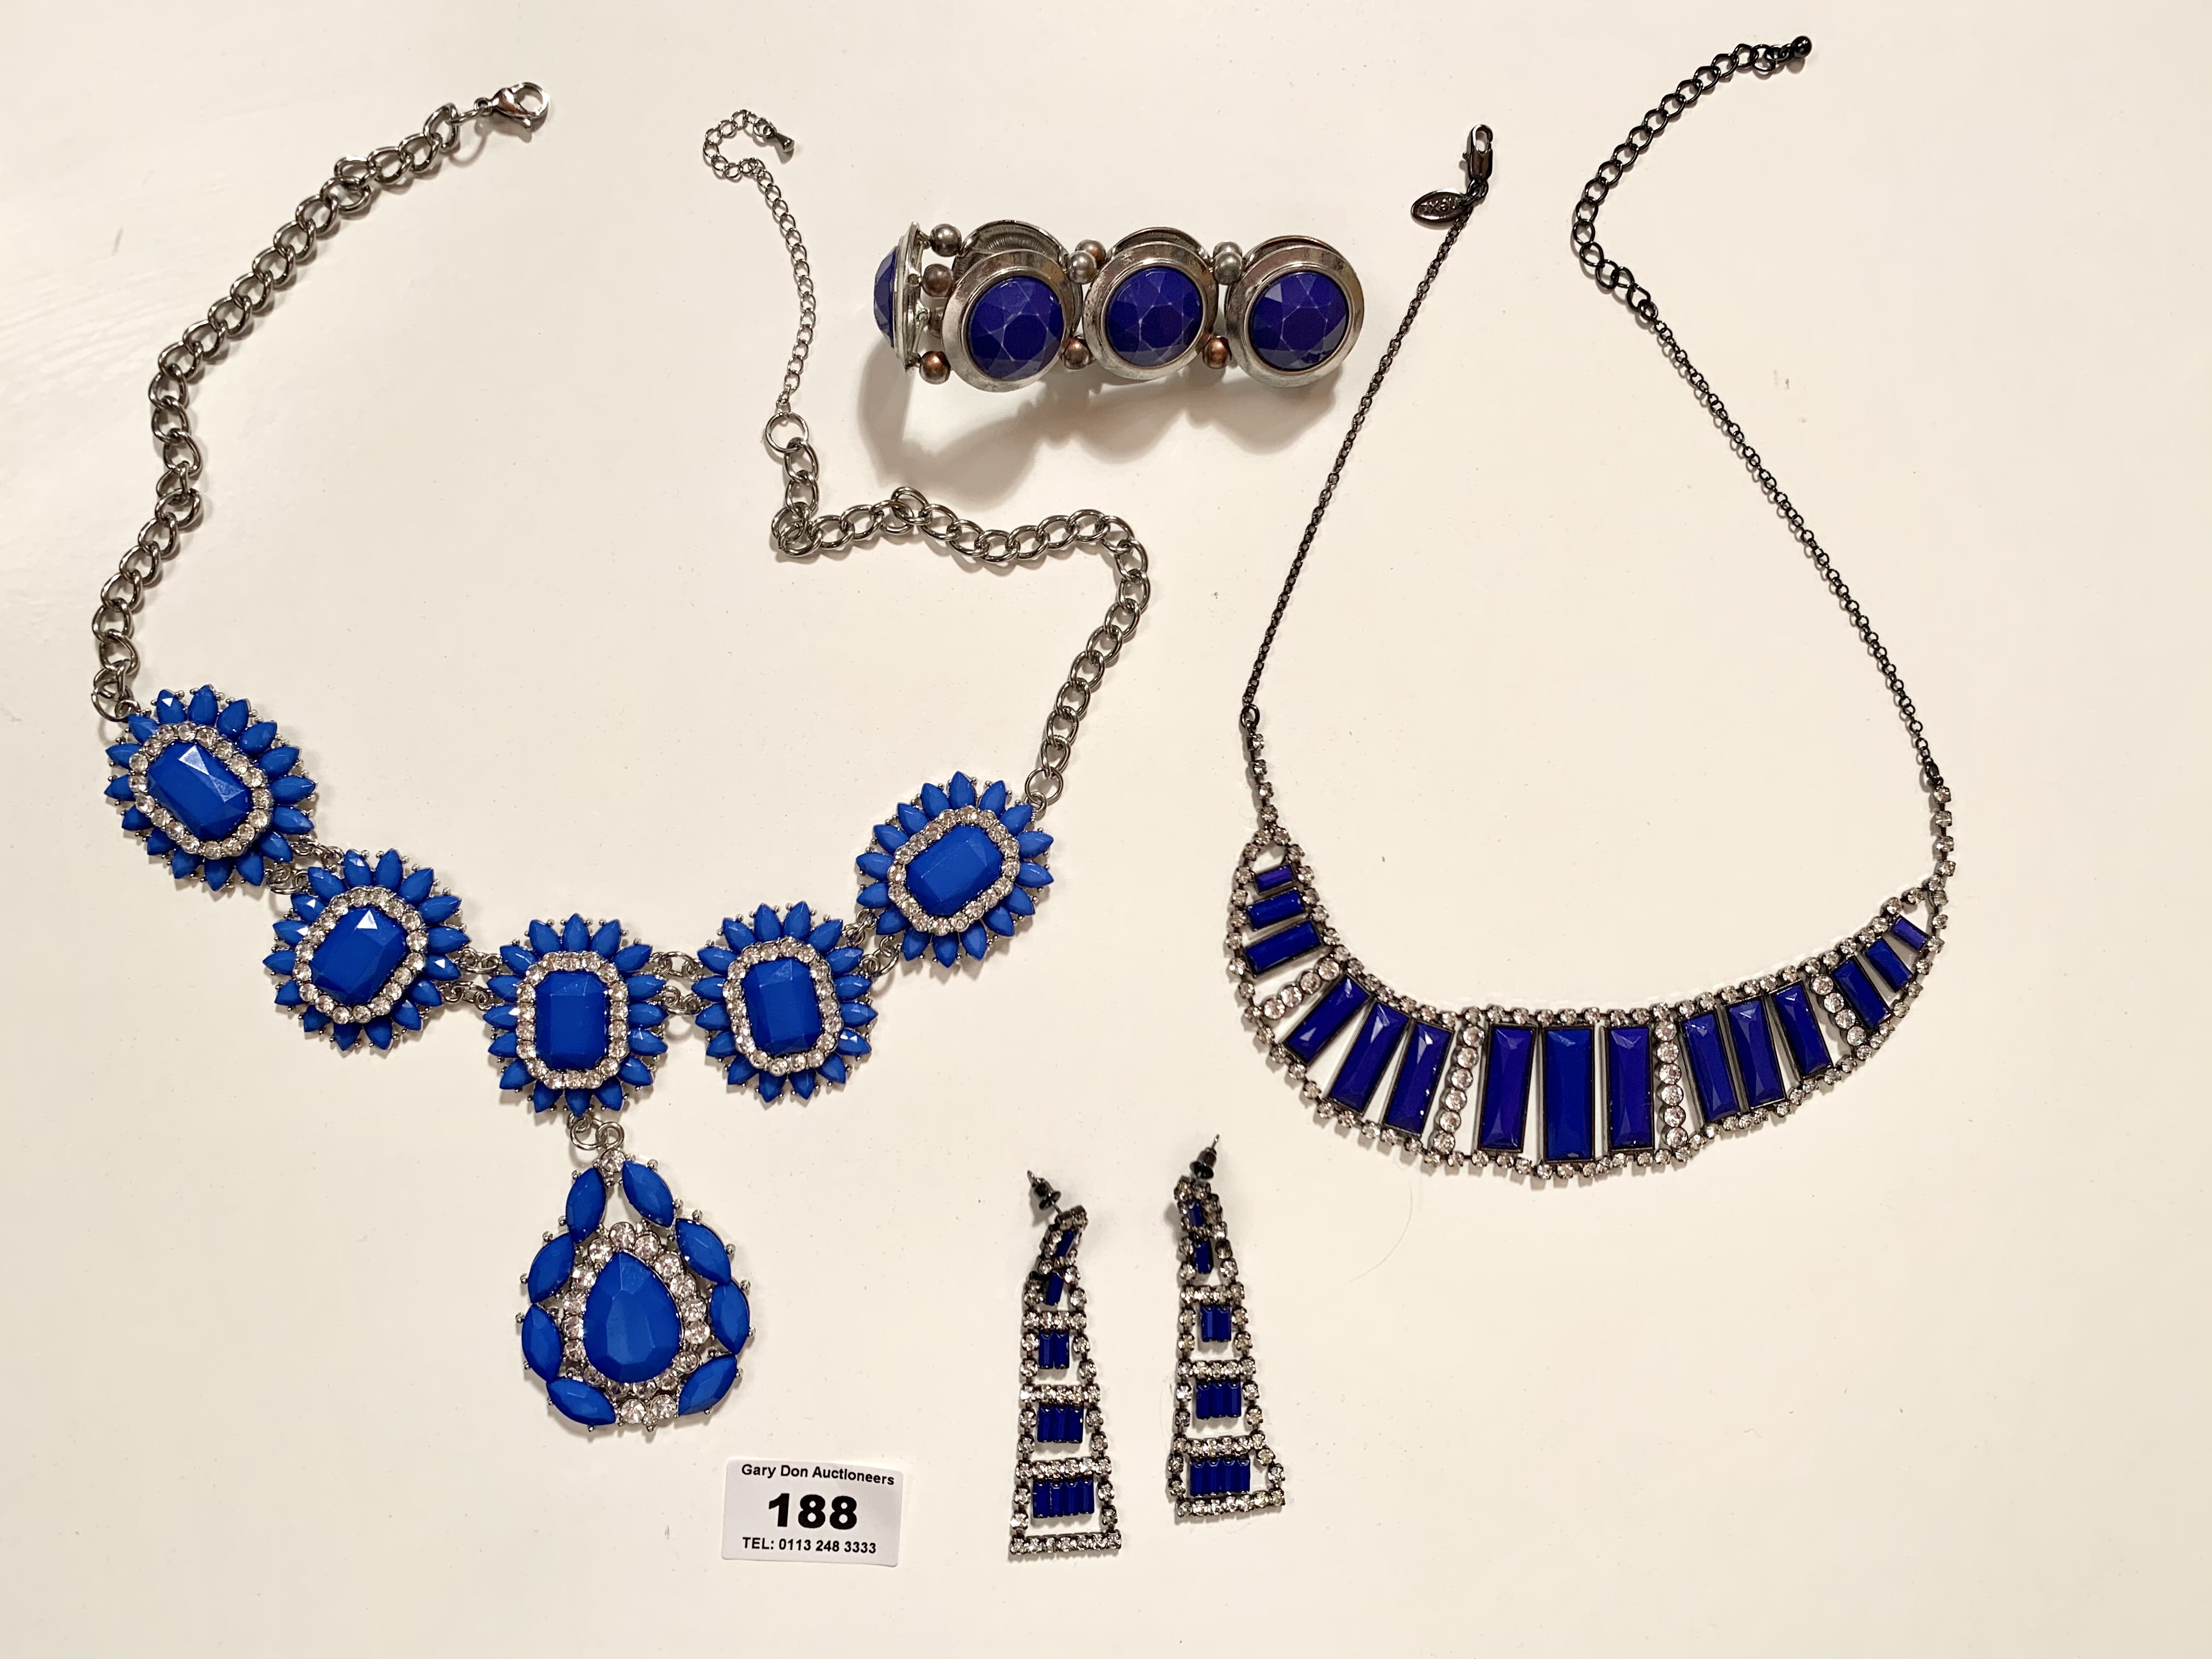 2 blue dress necklaces, pair of blue dress earrings and blue dress bracelet